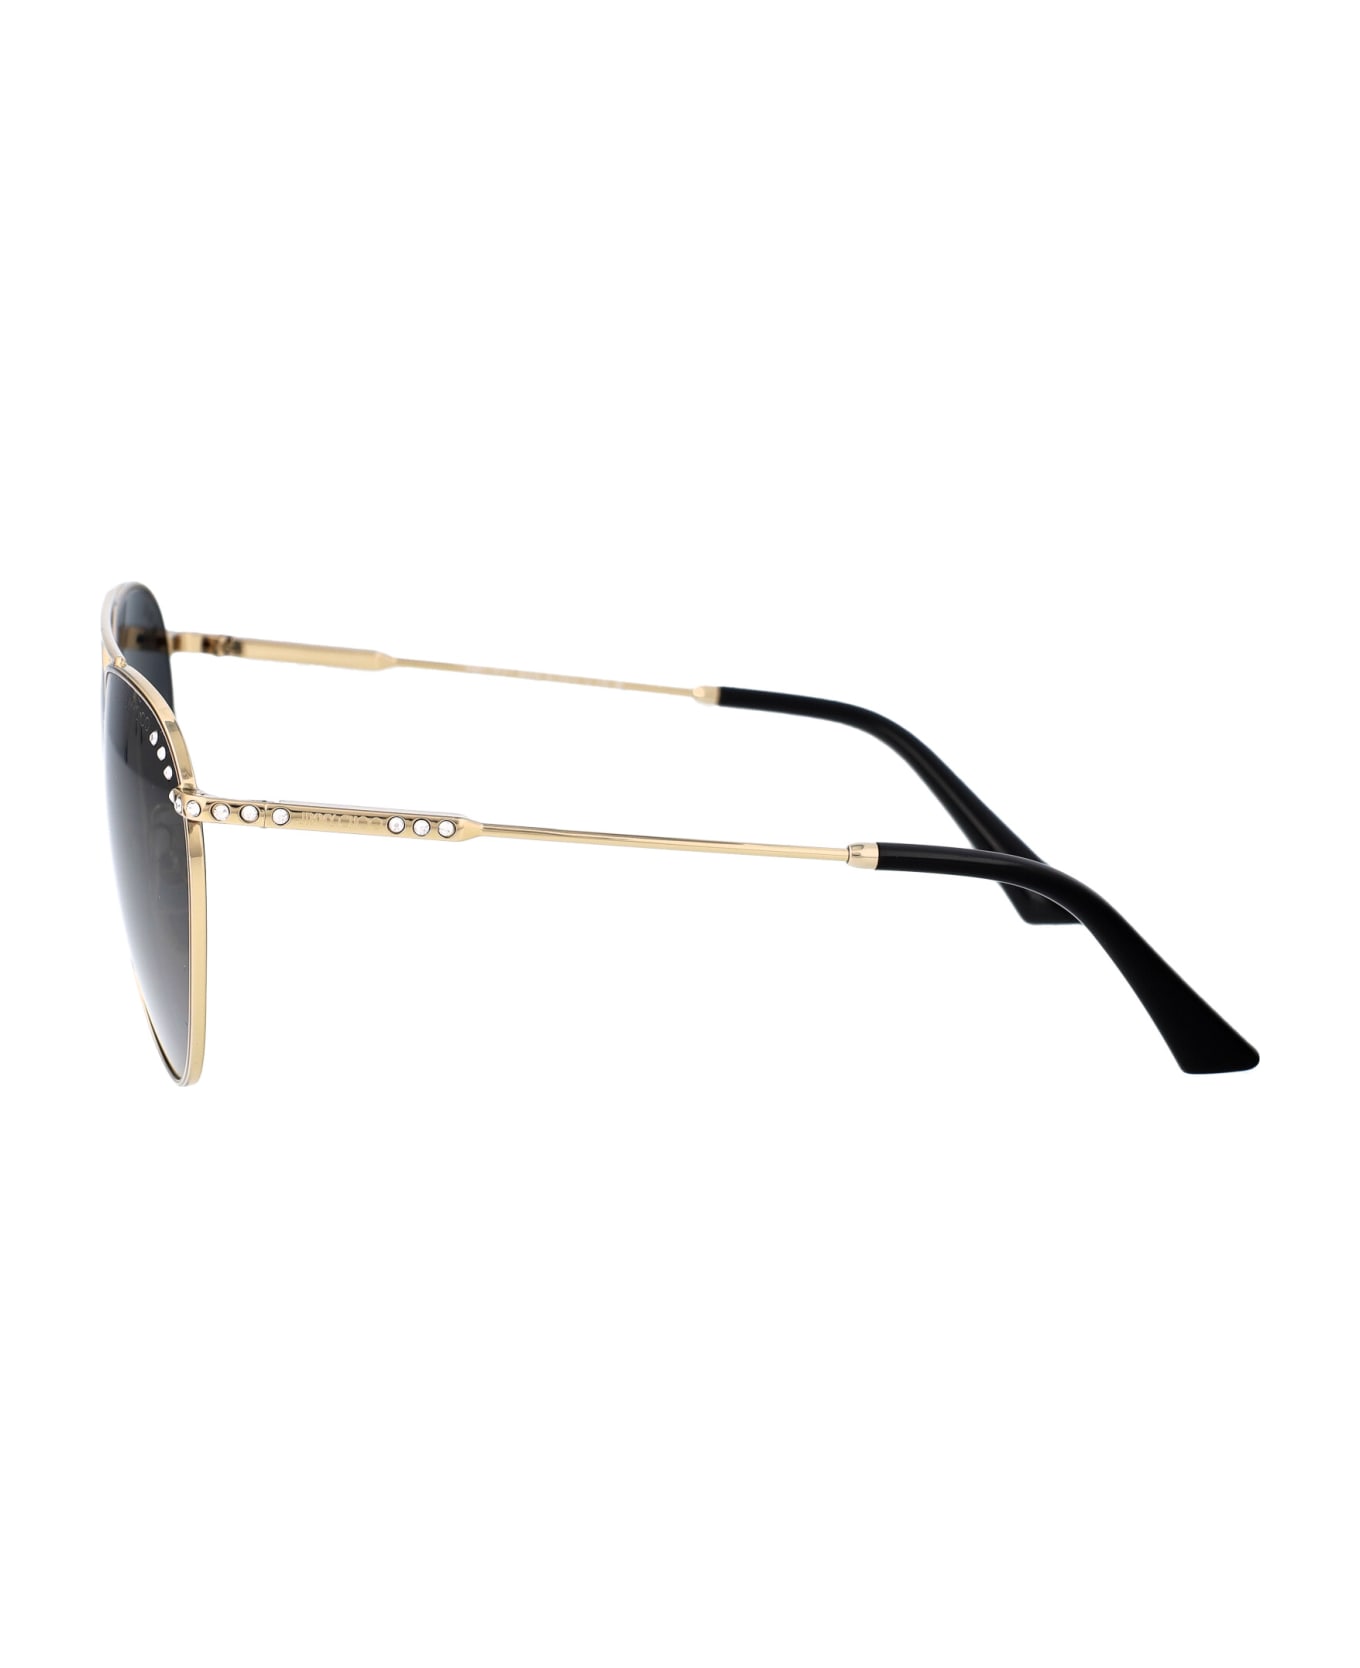 Jimmy Choo Eyewear 0jc4002b Sunglasses - 300687 Pale Gold